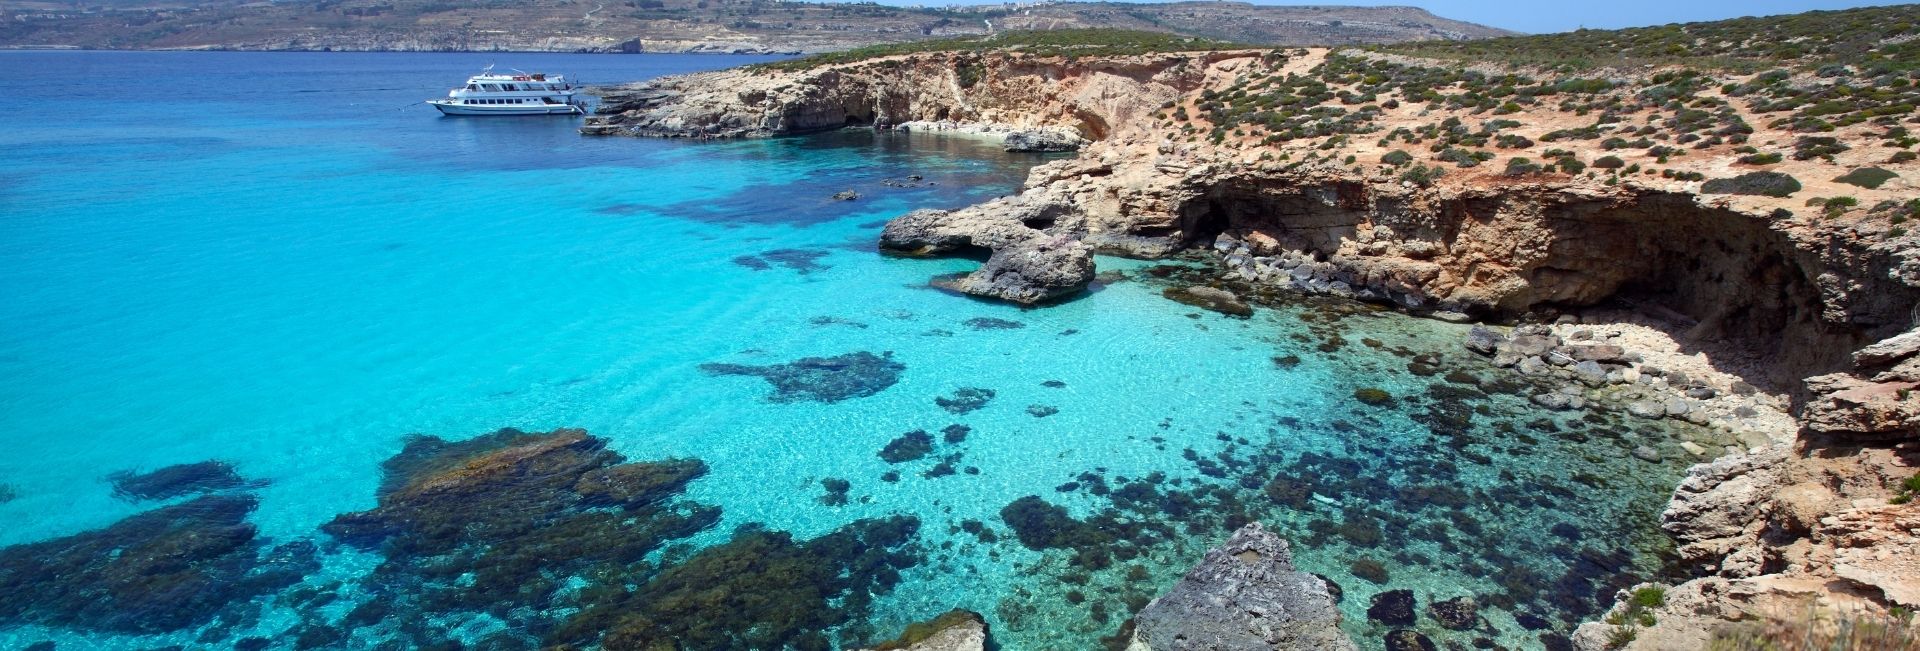 Malte, île incontournable